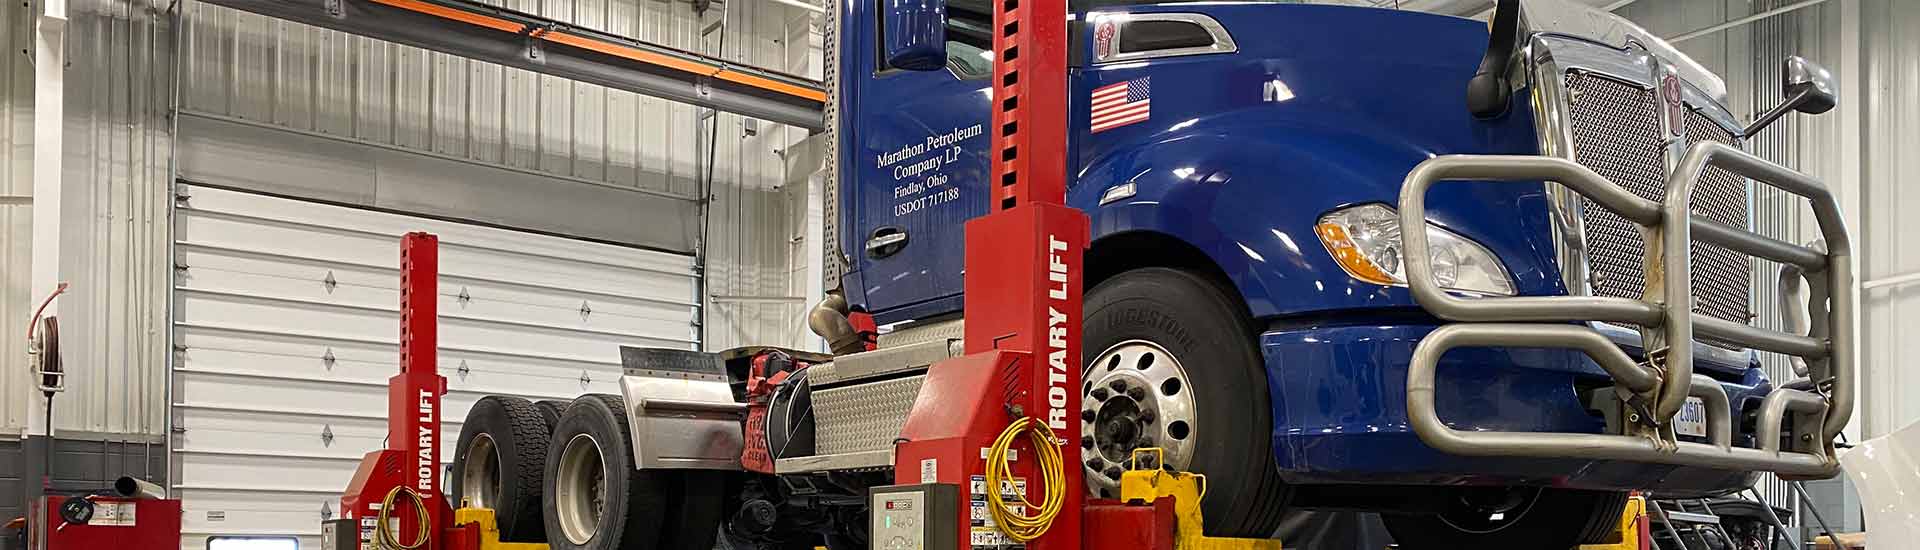 exit-16-fleet-repair-coopersville-mi-truck-repair-and-service_slide2